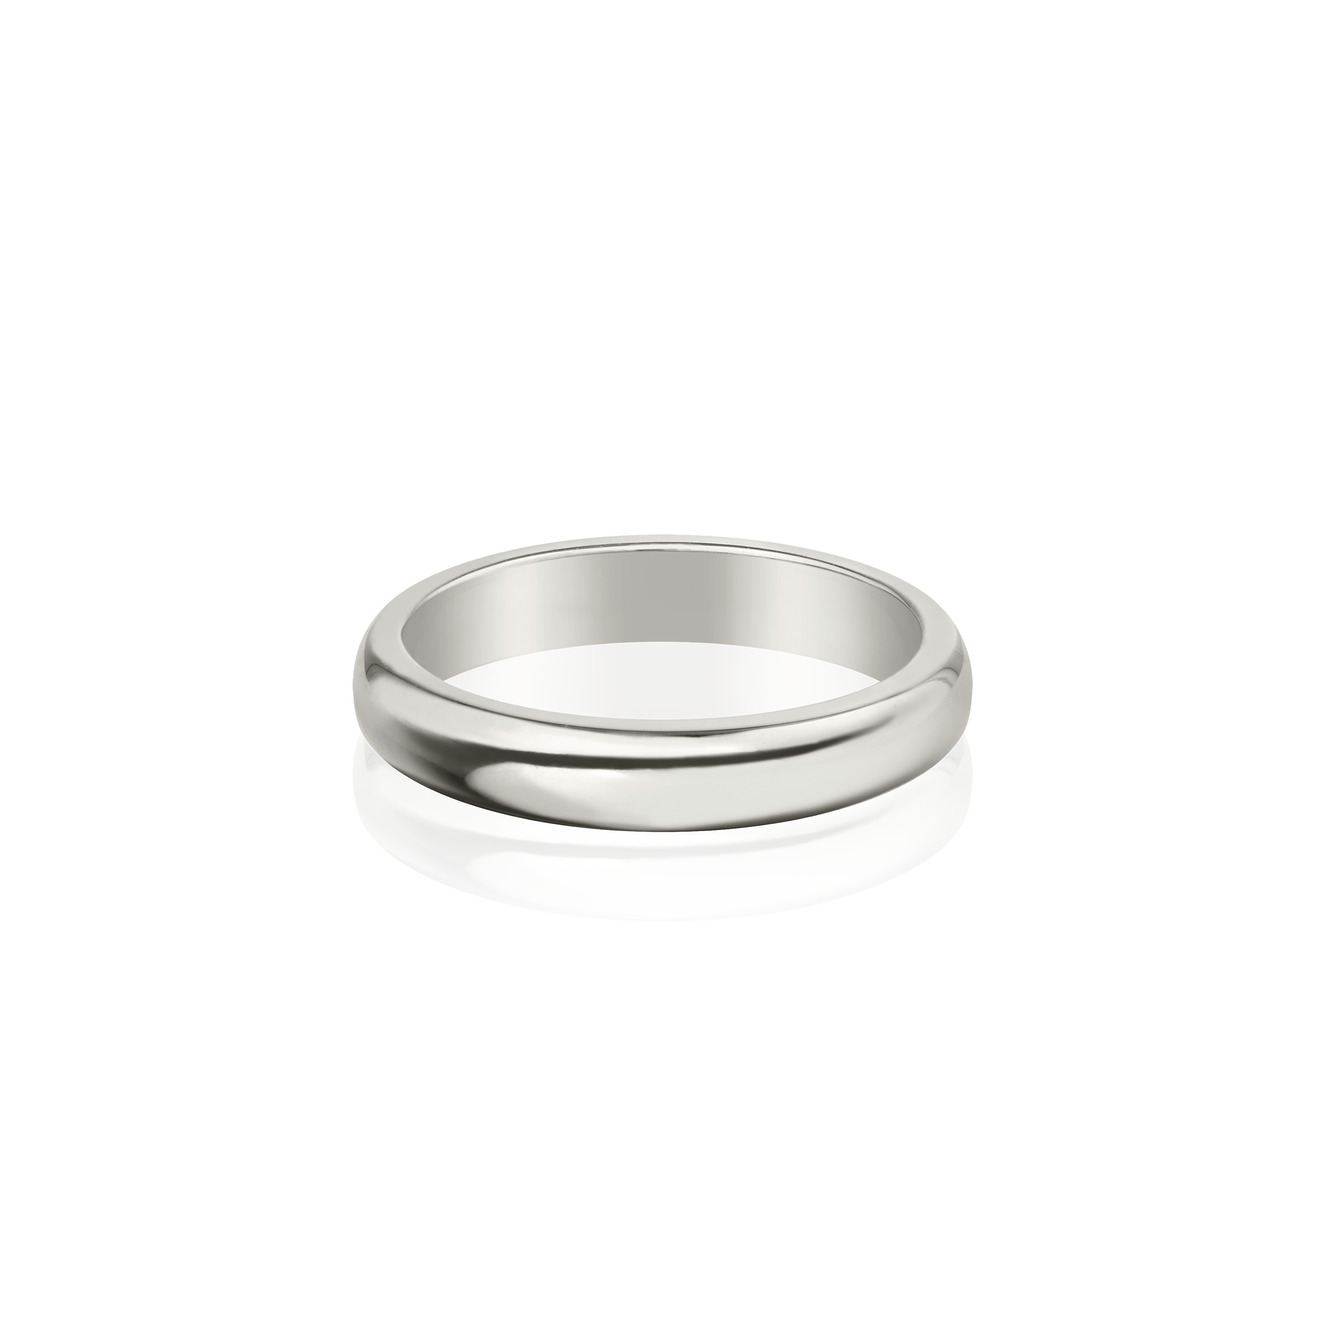 Vertigo Jewellery Lab Фаланговое кольцо из серебра ESSENTIALS vertigo jewellery lab кольцо сleoptr из серебра